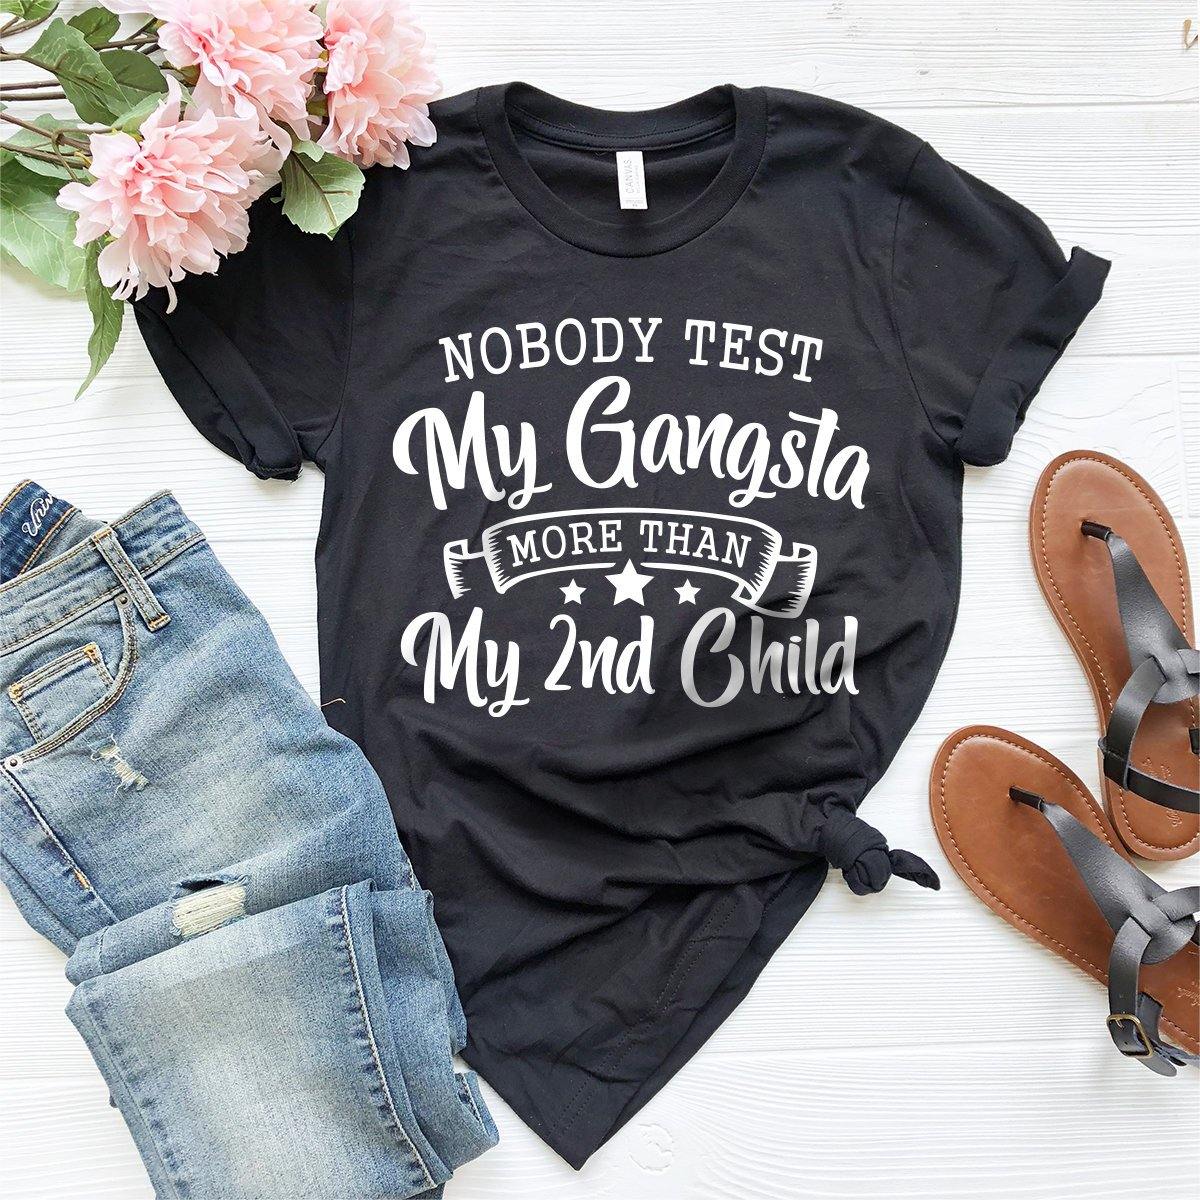 Mom Of 2 Shirt, Second Child Shirt, Funny Mom Tshirt, Mom Of Multiples Shirt, Mom Shirt, Nobody Test My Gangsta More Than My 2nd Child Shirt - Fastdeliverytees.com